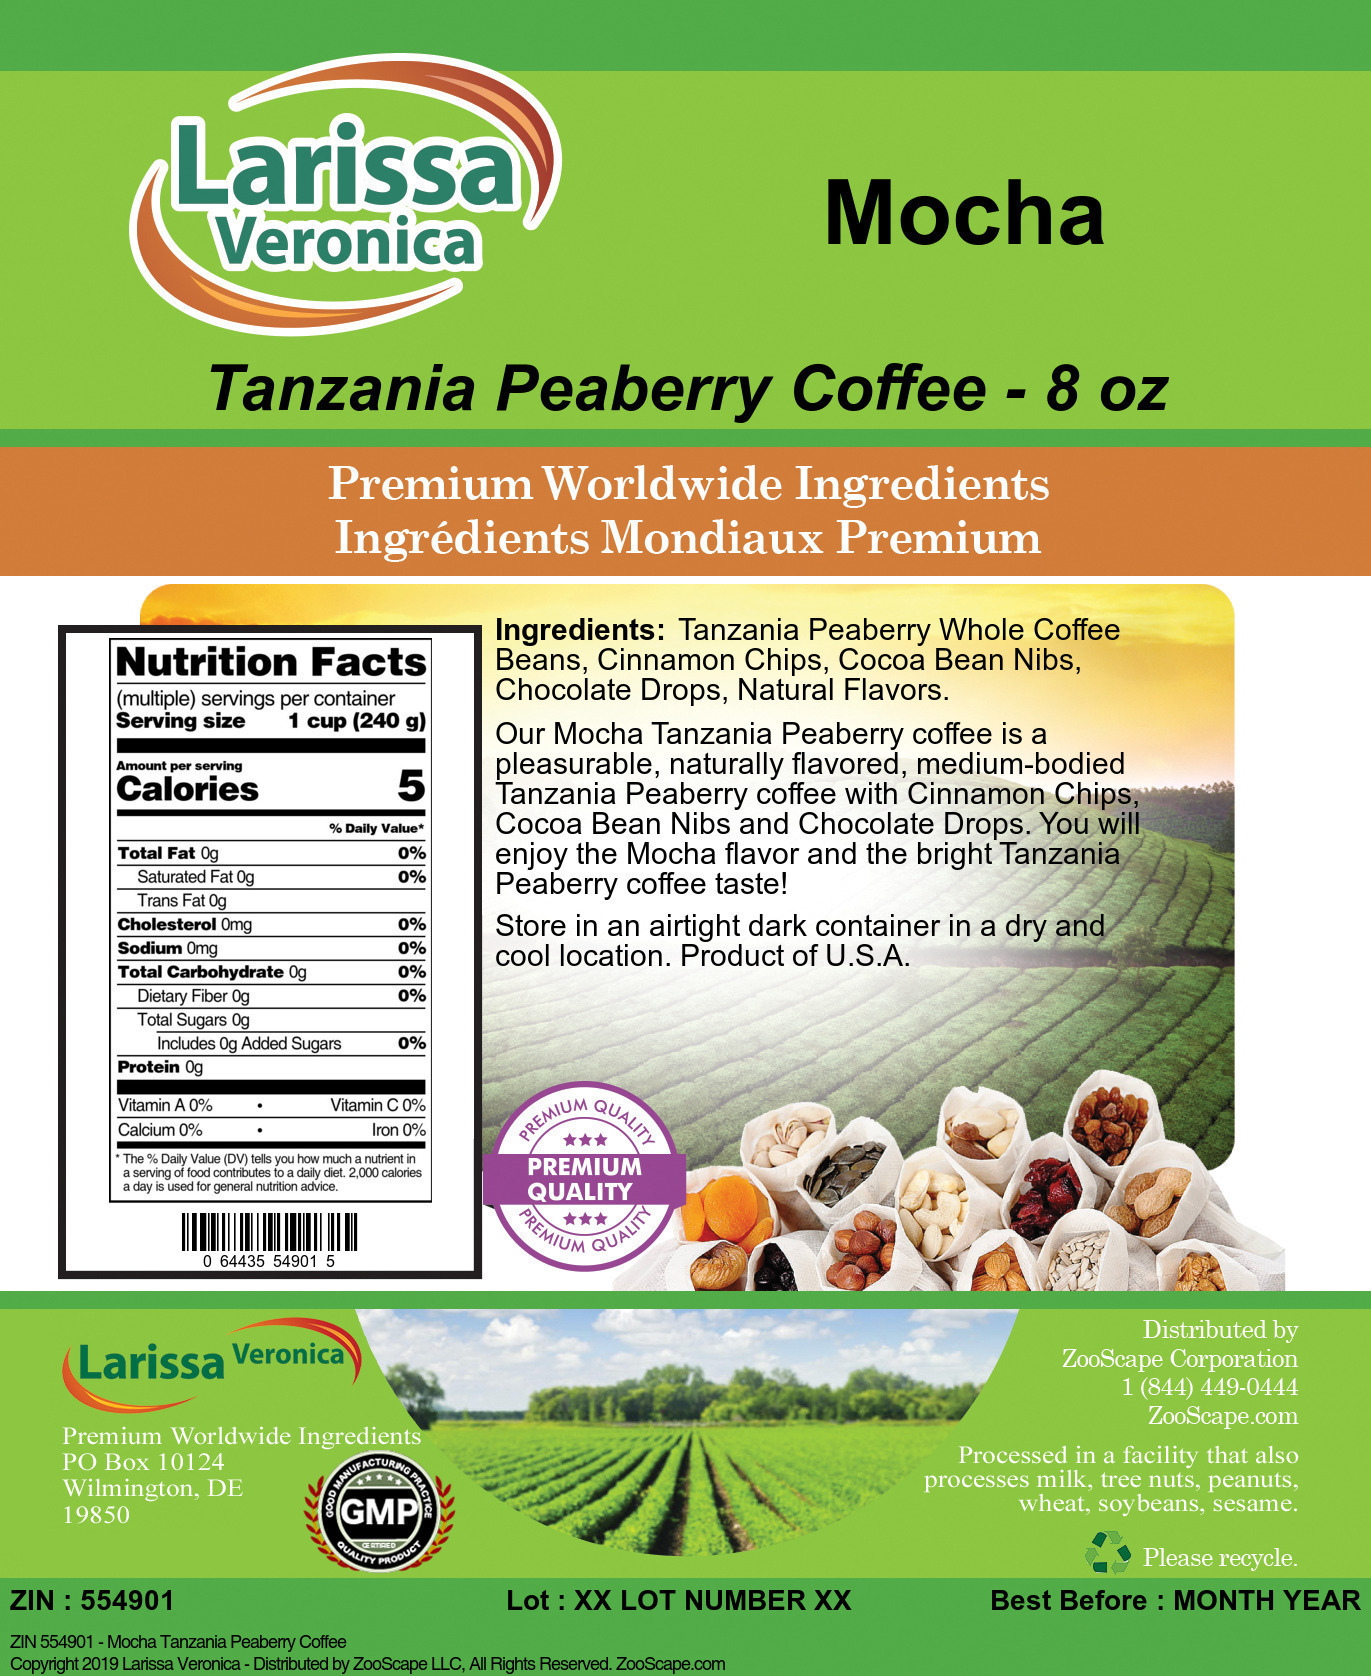 Mocha Tanzania Peaberry Coffee - Label